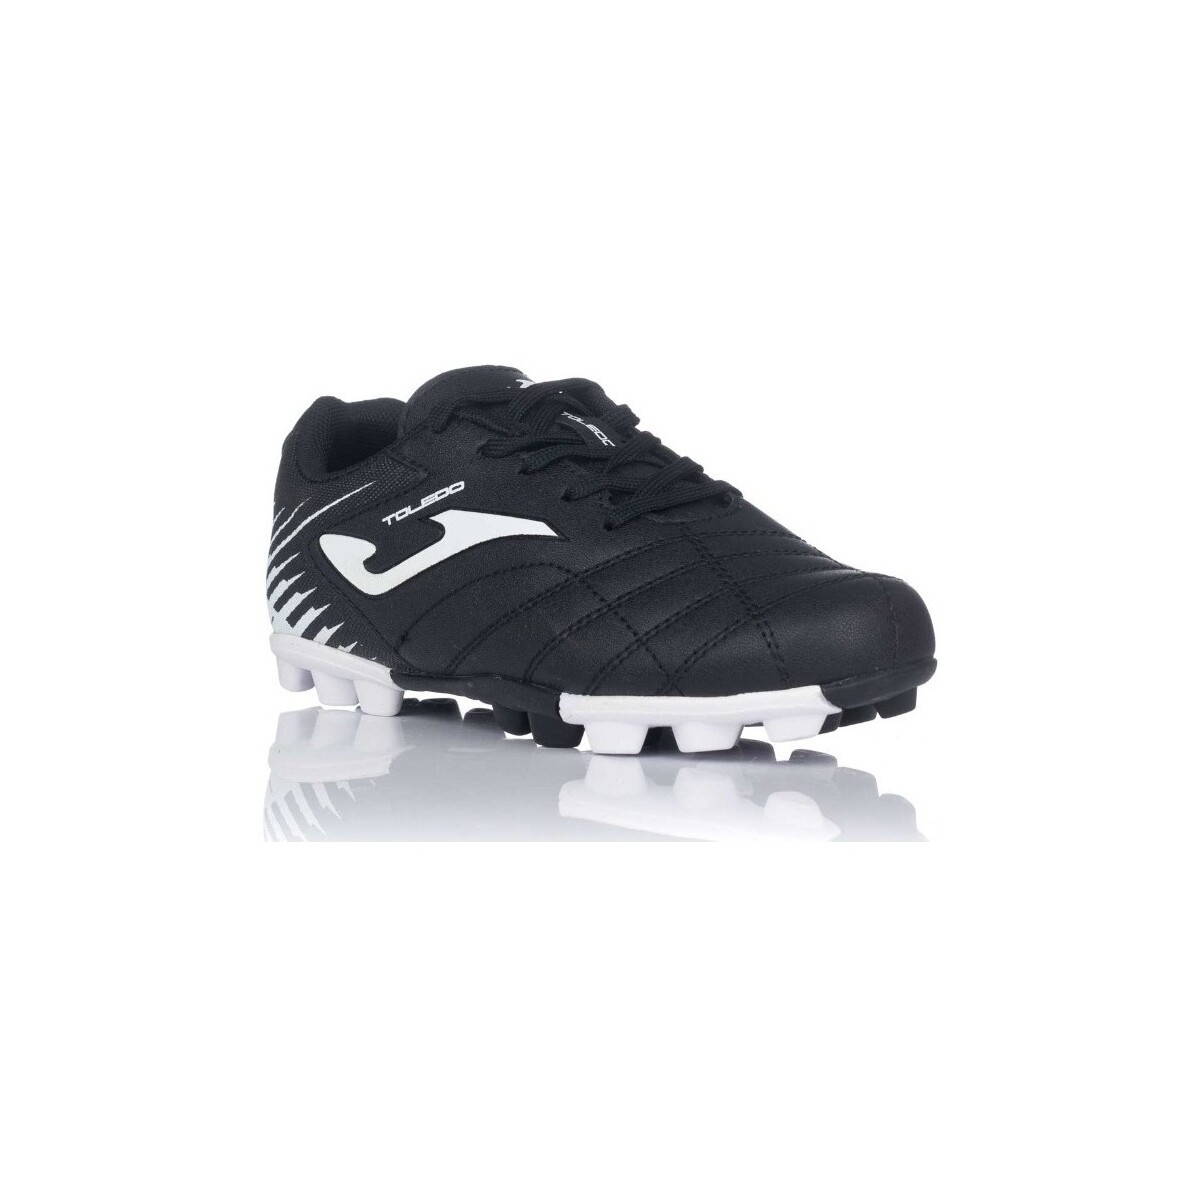 Chaussures Football Joma TOLJW.921.24 Noir